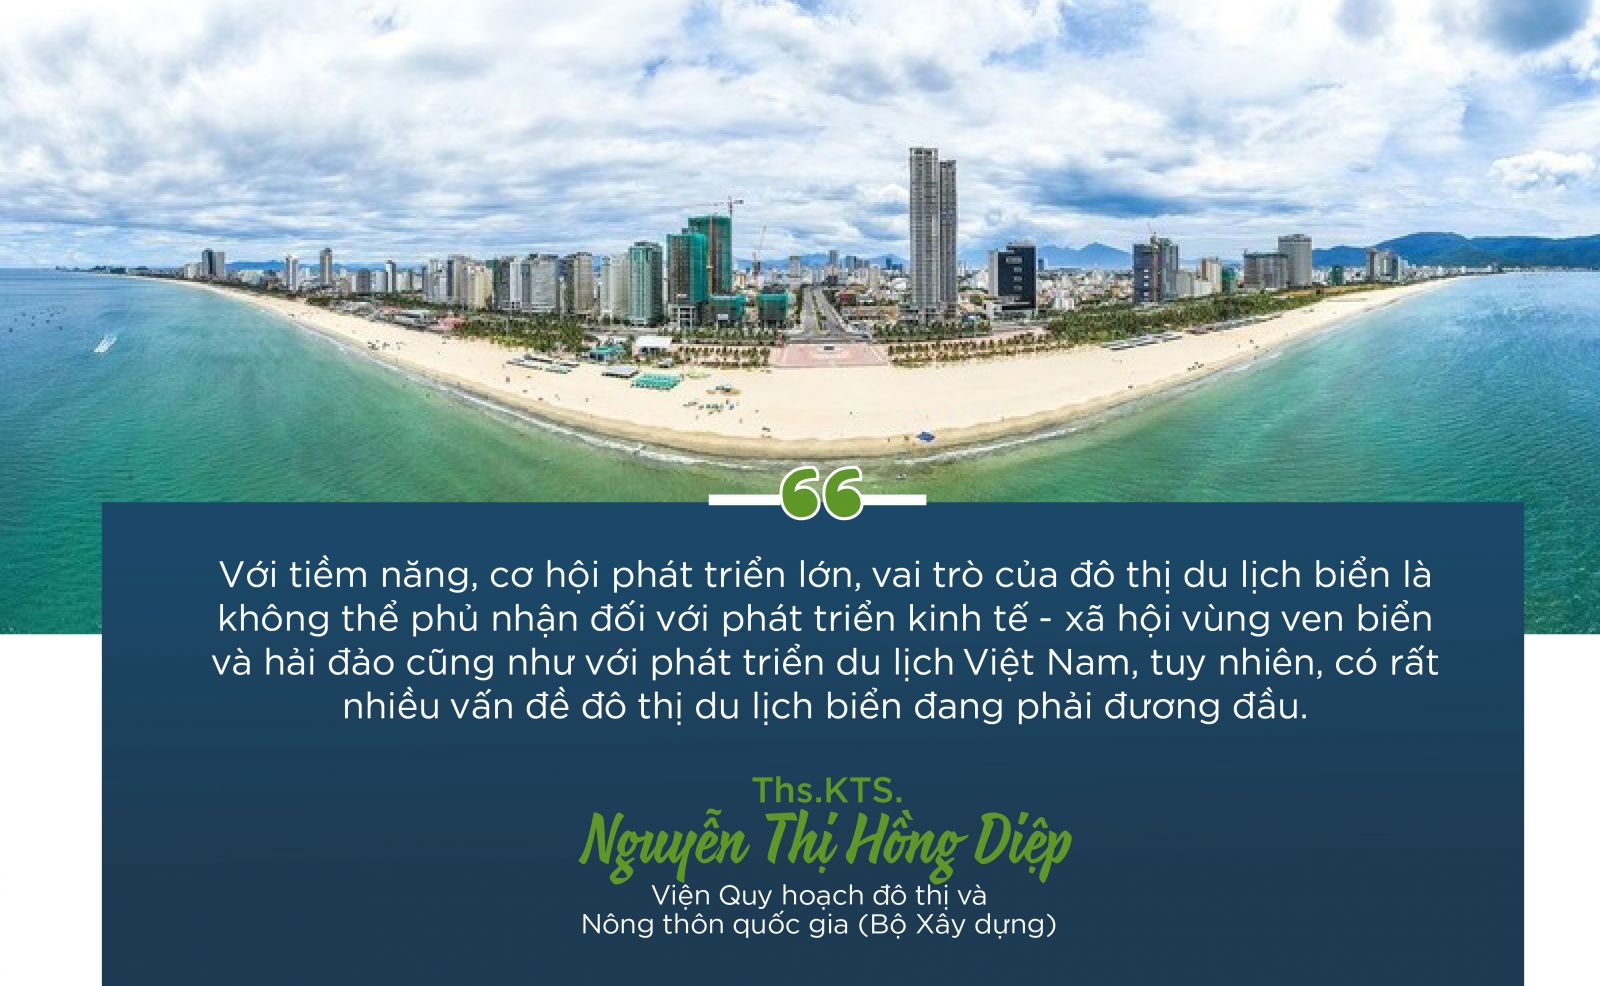 KTS Nguyễn Thị Hồng Diệp